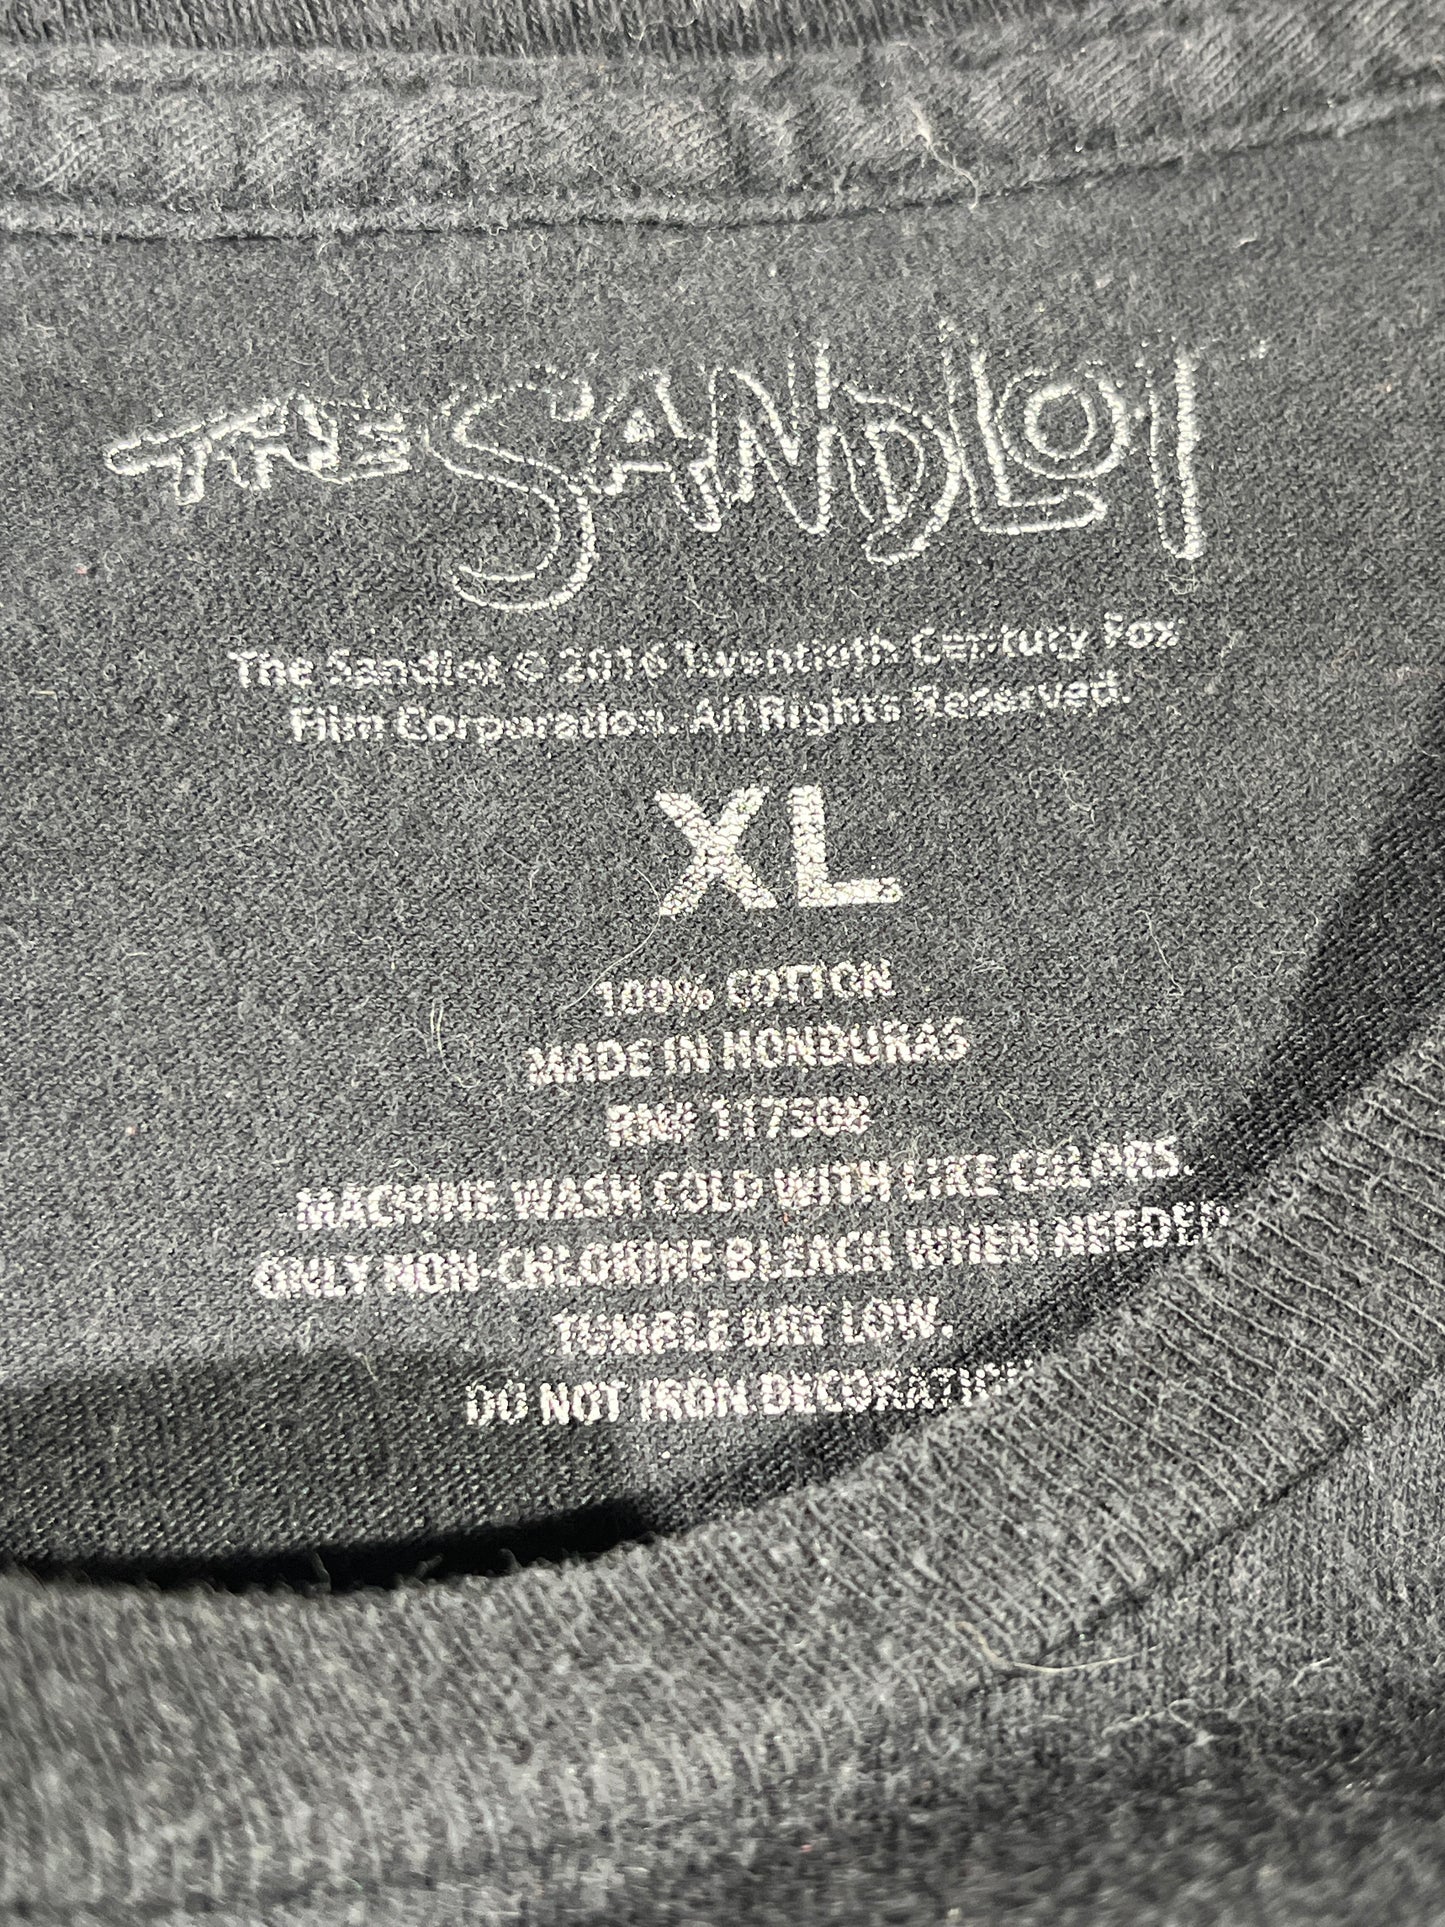 Vintage Sandlot T-Shirt Movie You're killing me Smalls